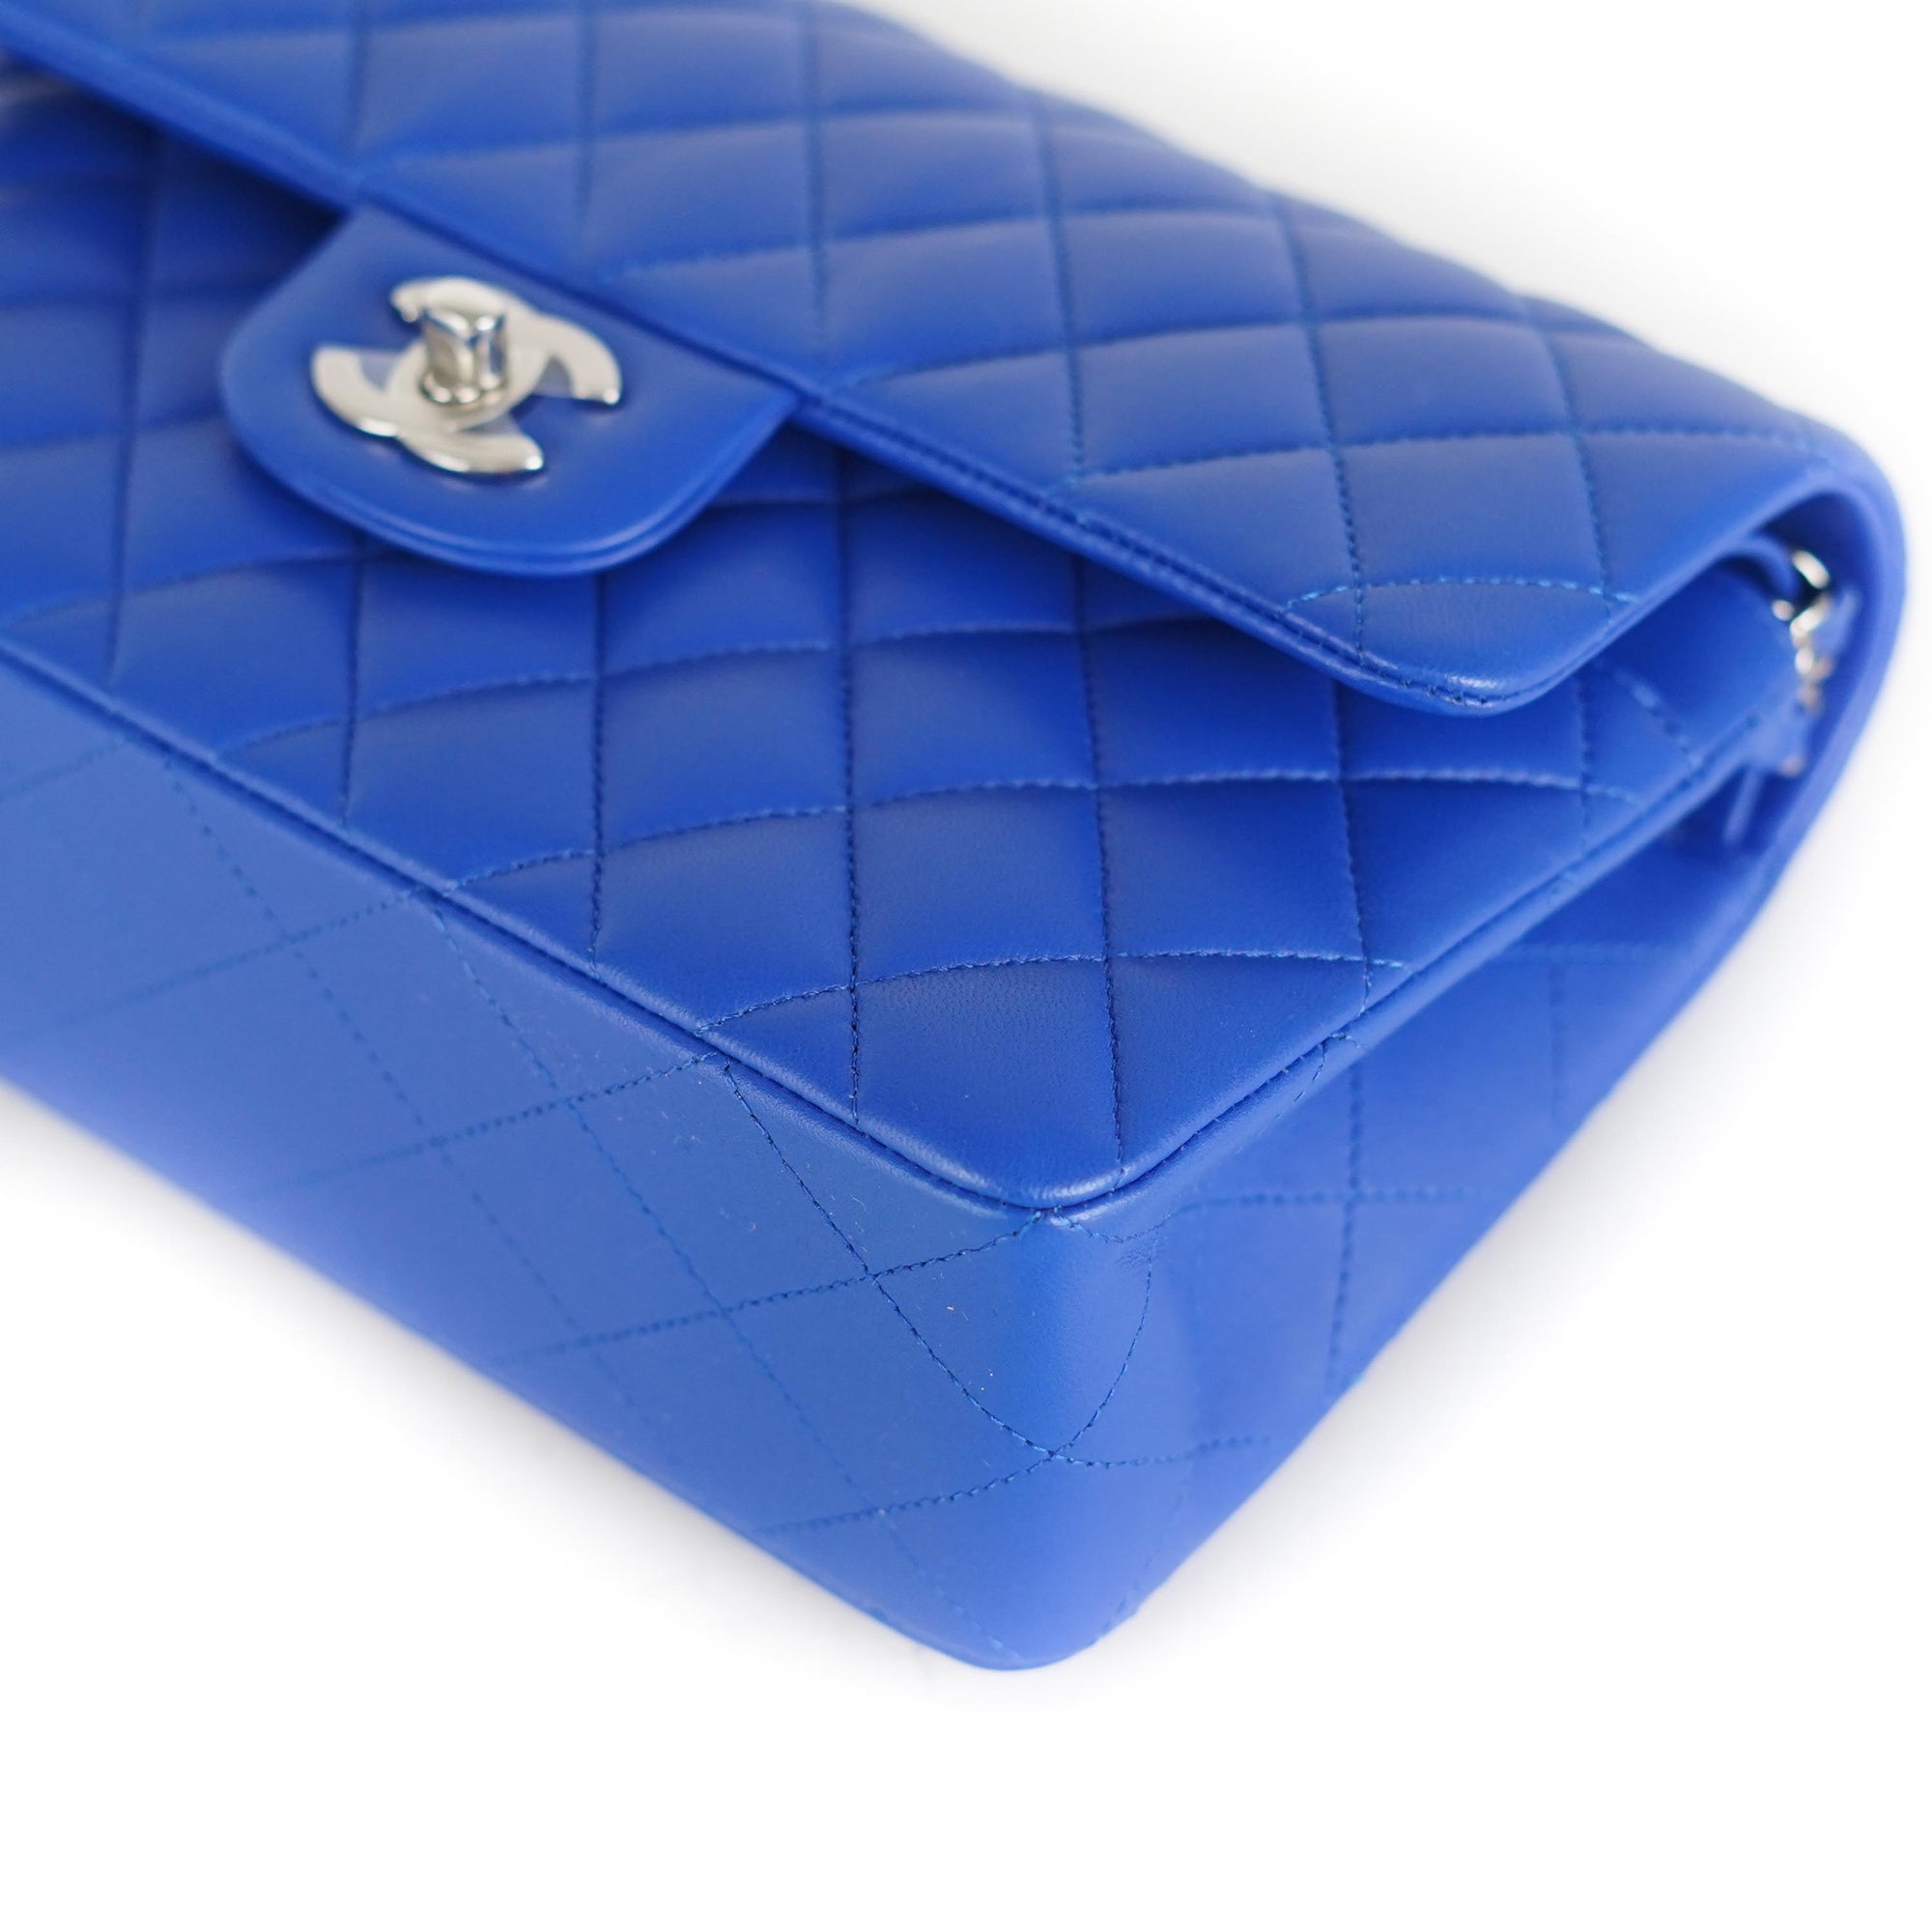 Chanel Timeless Blue Bag (Bag, Bag, Classic). New price: €9500